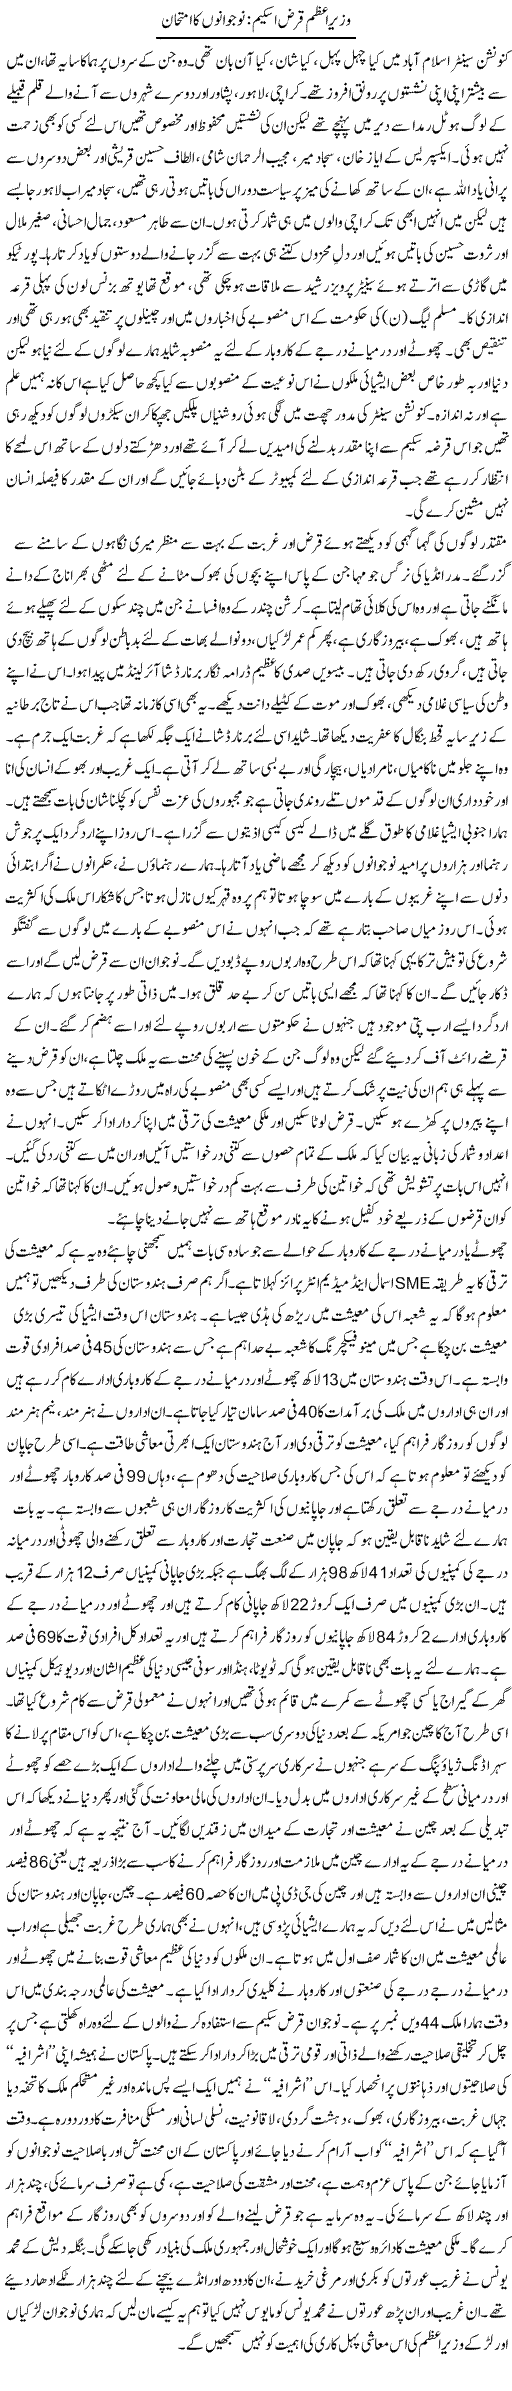 Wazeer e Azam Qarz Scheme Nojawano Ka Imtehan | Zahida Hina | Daily Urdu Columns